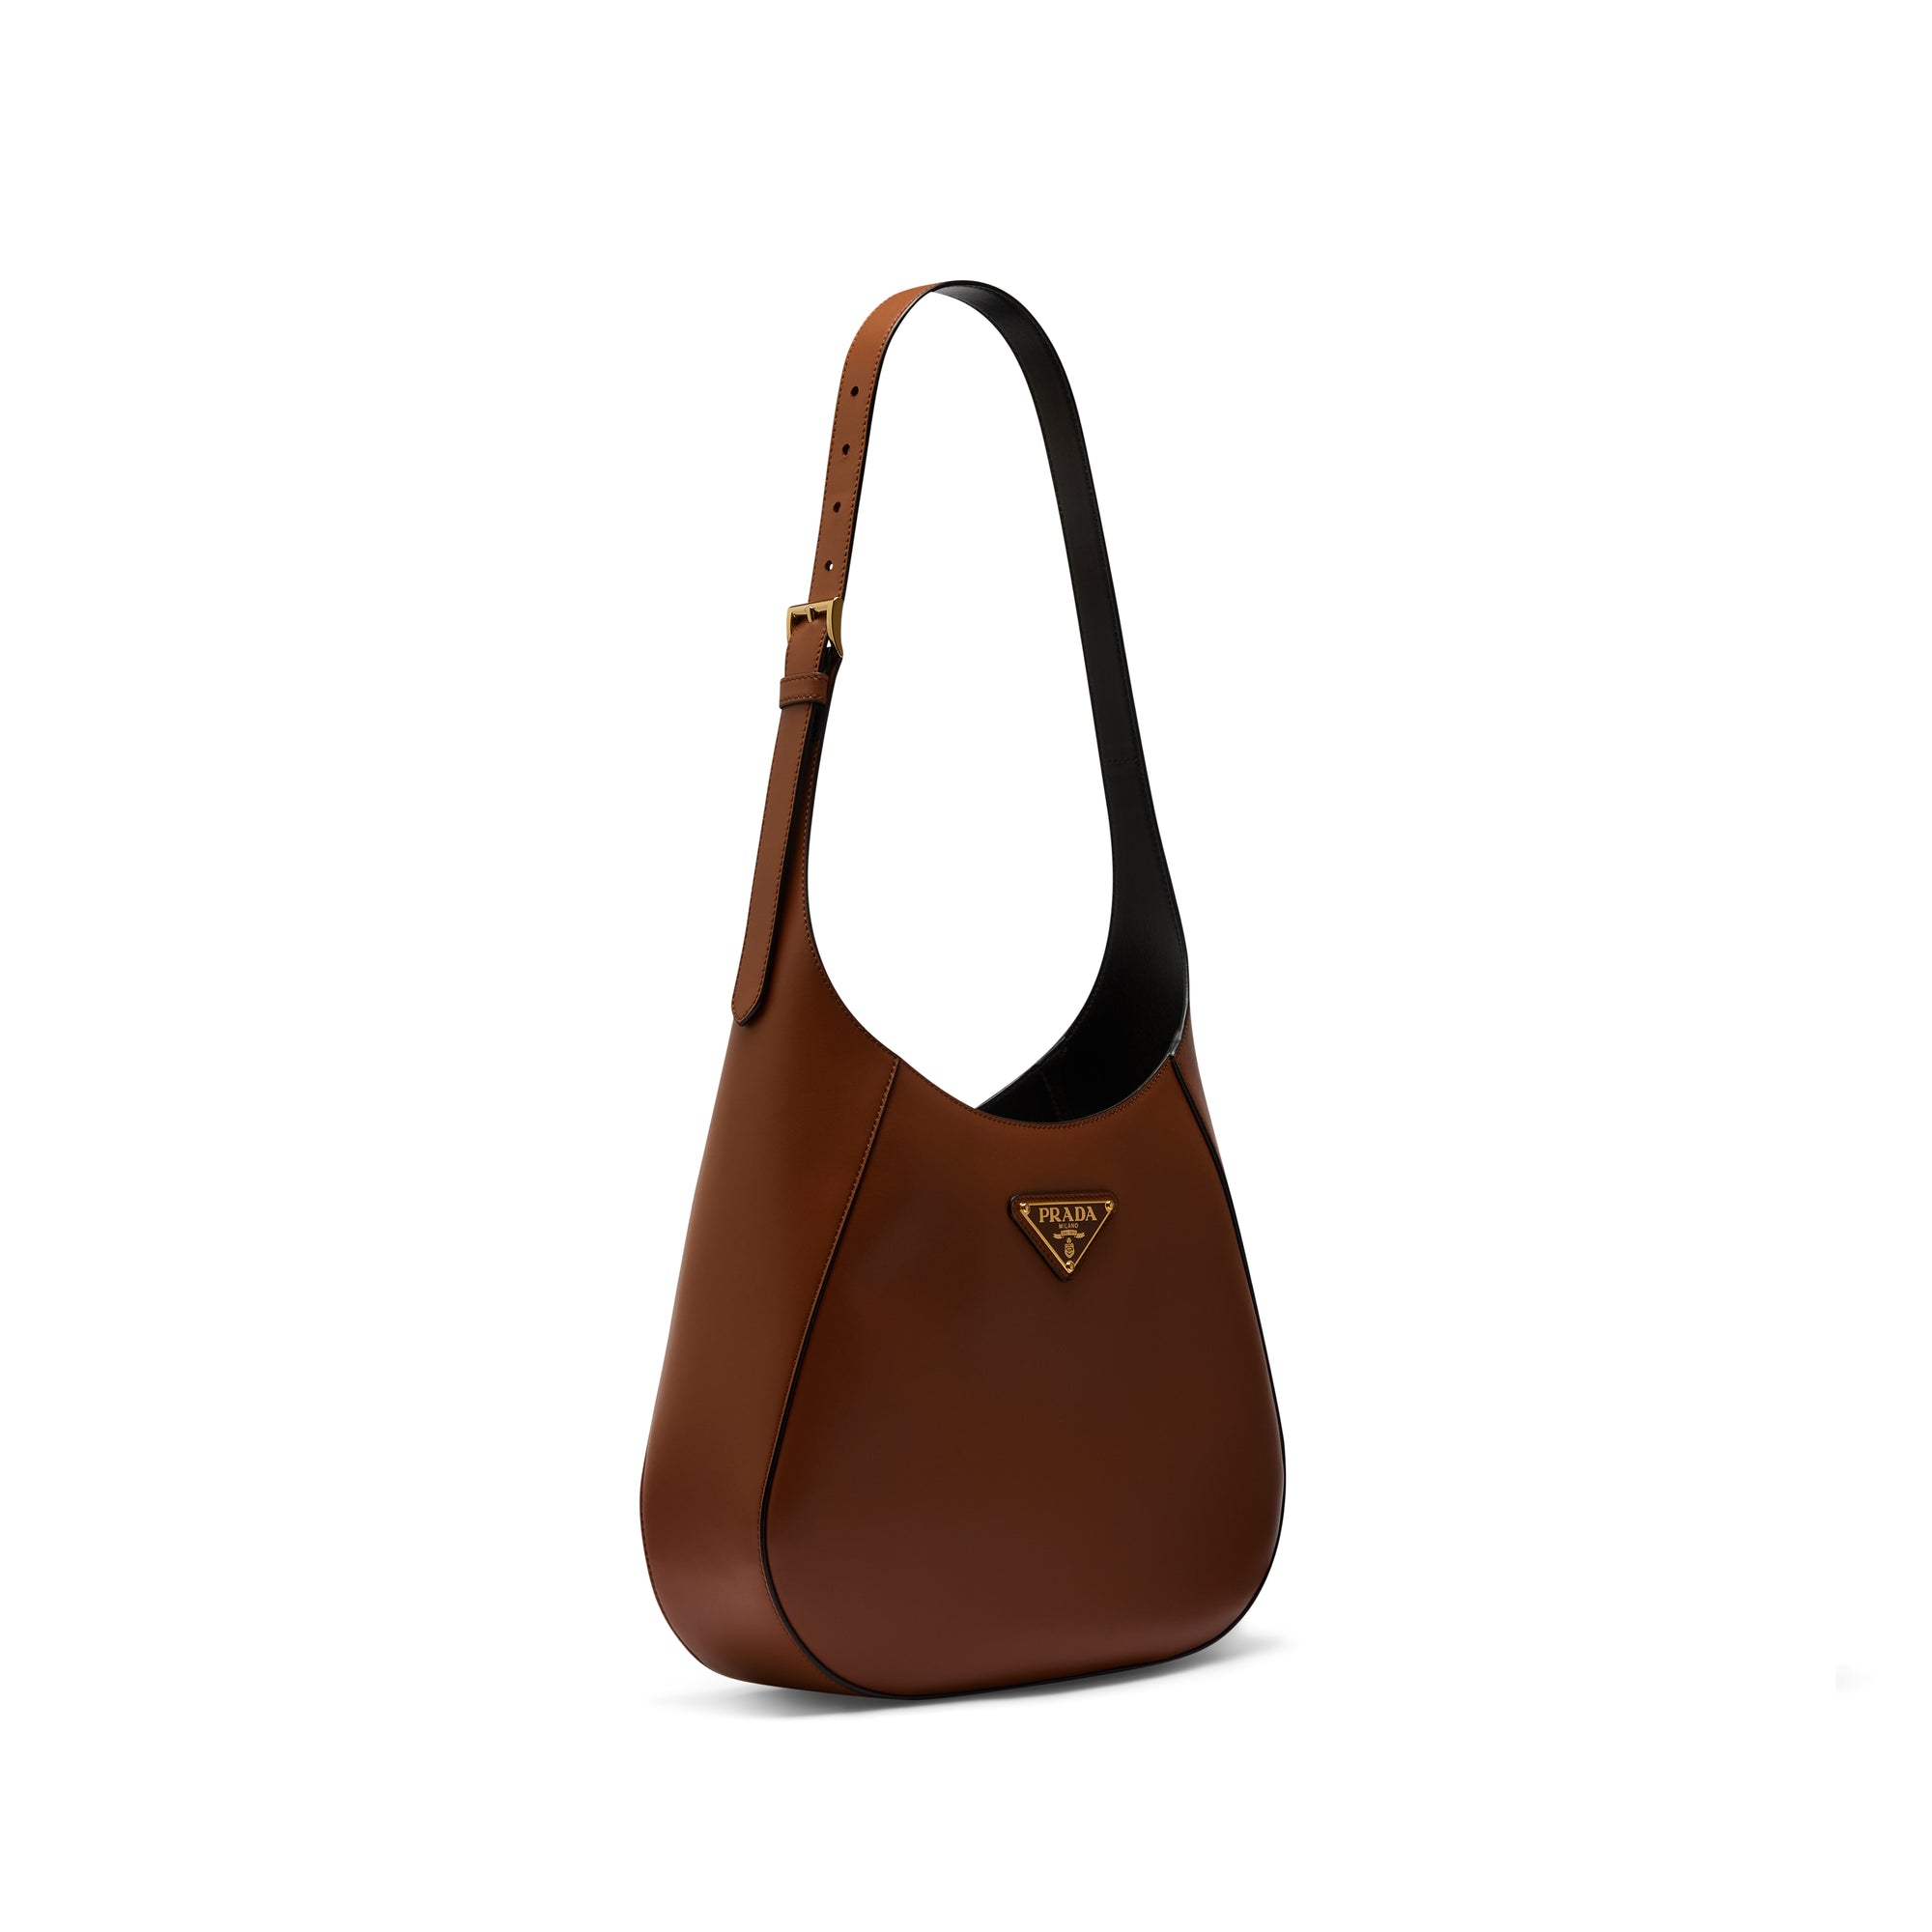 Prada - Women’s Large Leather Handbag - (Cognac) view 2